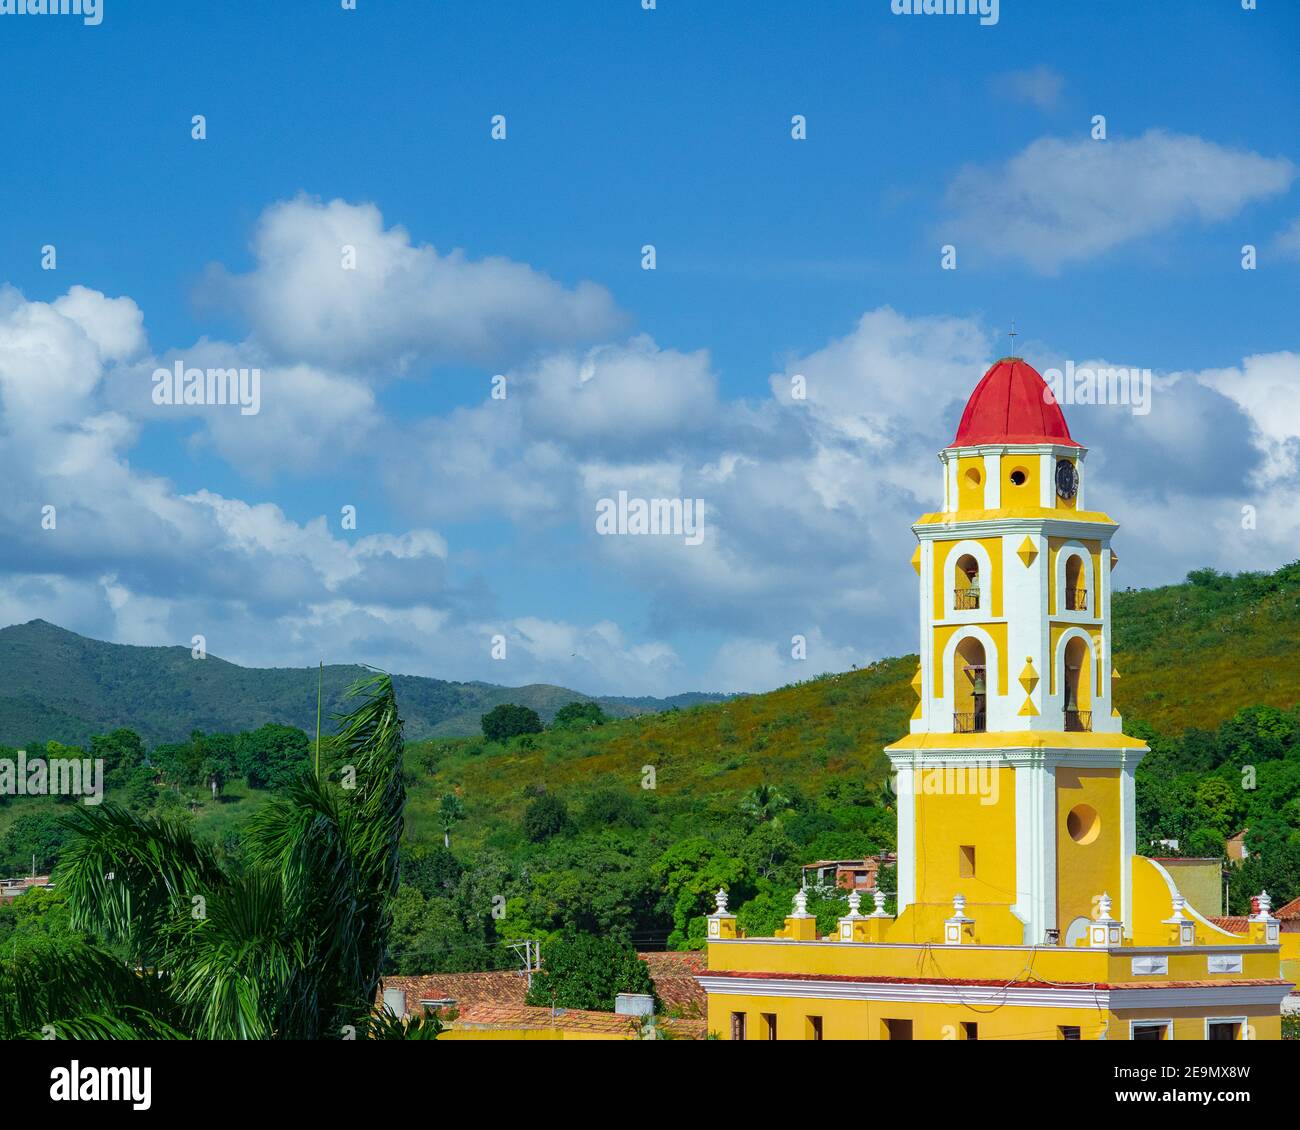 A view of the bell tower of the Iglesia y Convento de San Francisco in Trinidad, Sancti Spíritus, Cuba Stock Photo